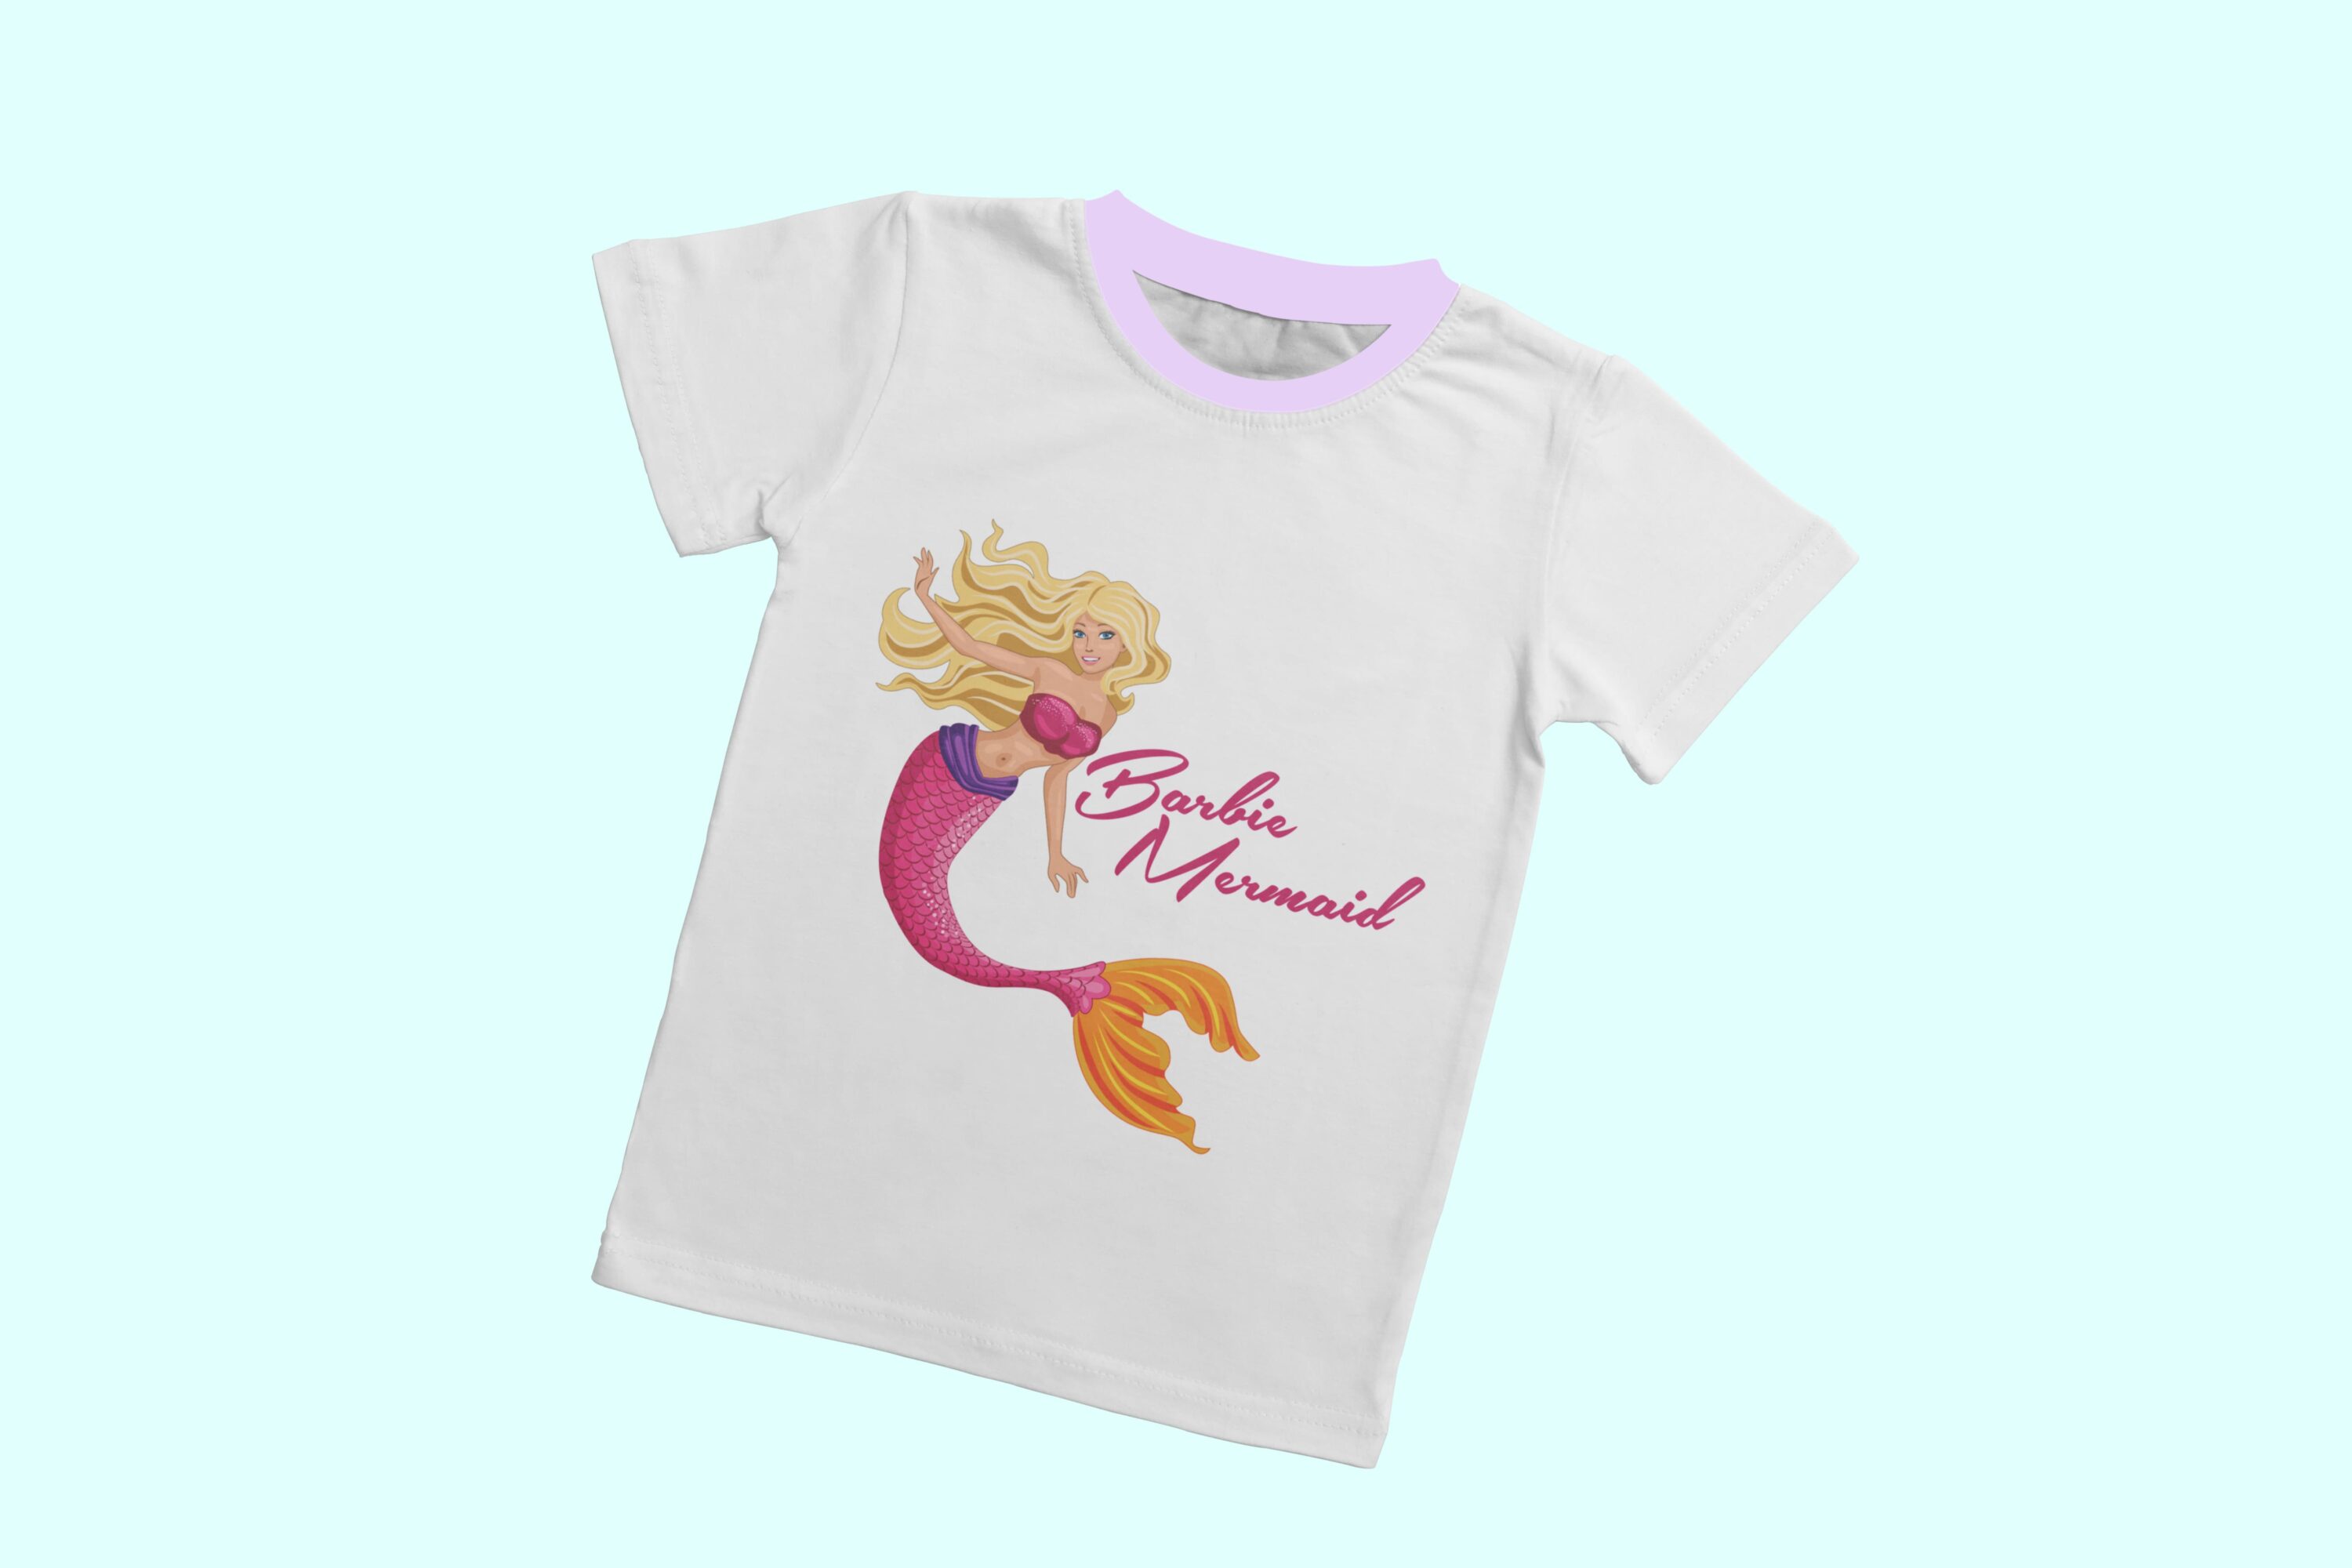 Mermaids on a T-shirt.